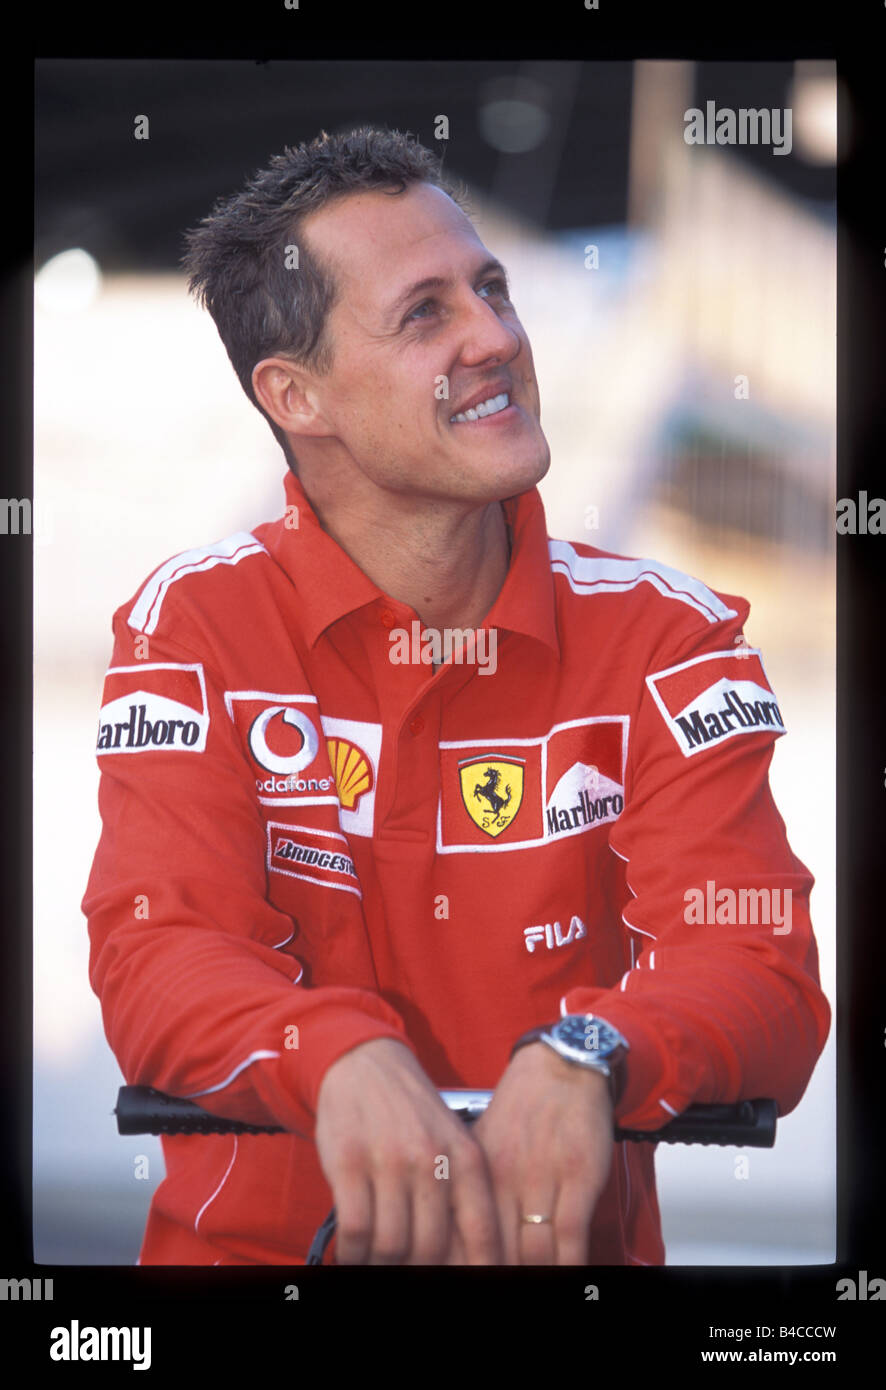 El deporte del motor, Michael Schumacher, Ferrari, Formel 1 2005, Race Driver, Retrato, Bahrein, Fotógrafo: Daniel Reinhard Foto de stock